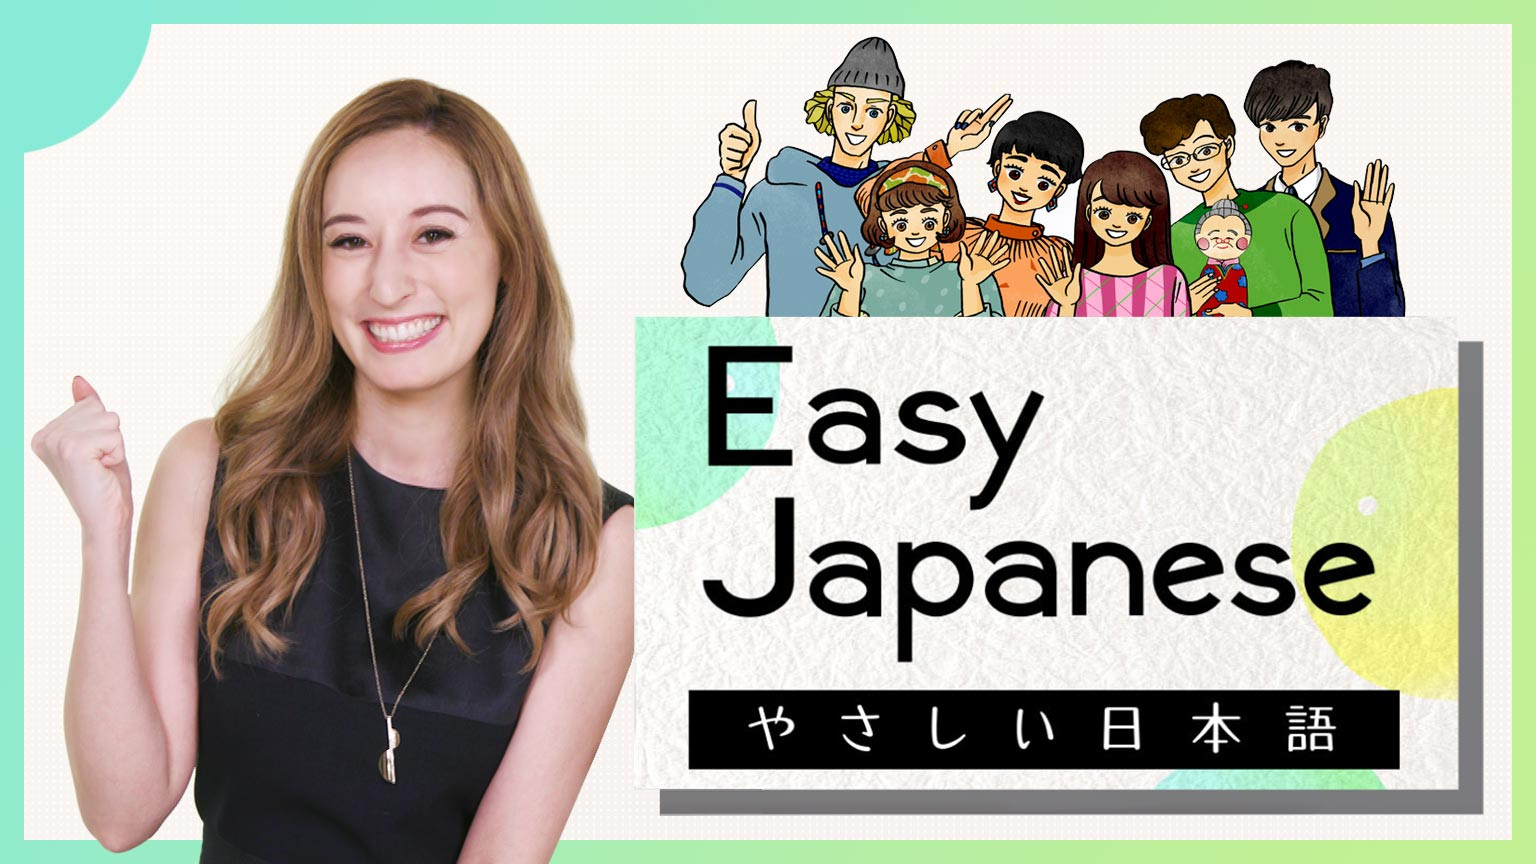 Hablemos en japonés
Easy Japanese